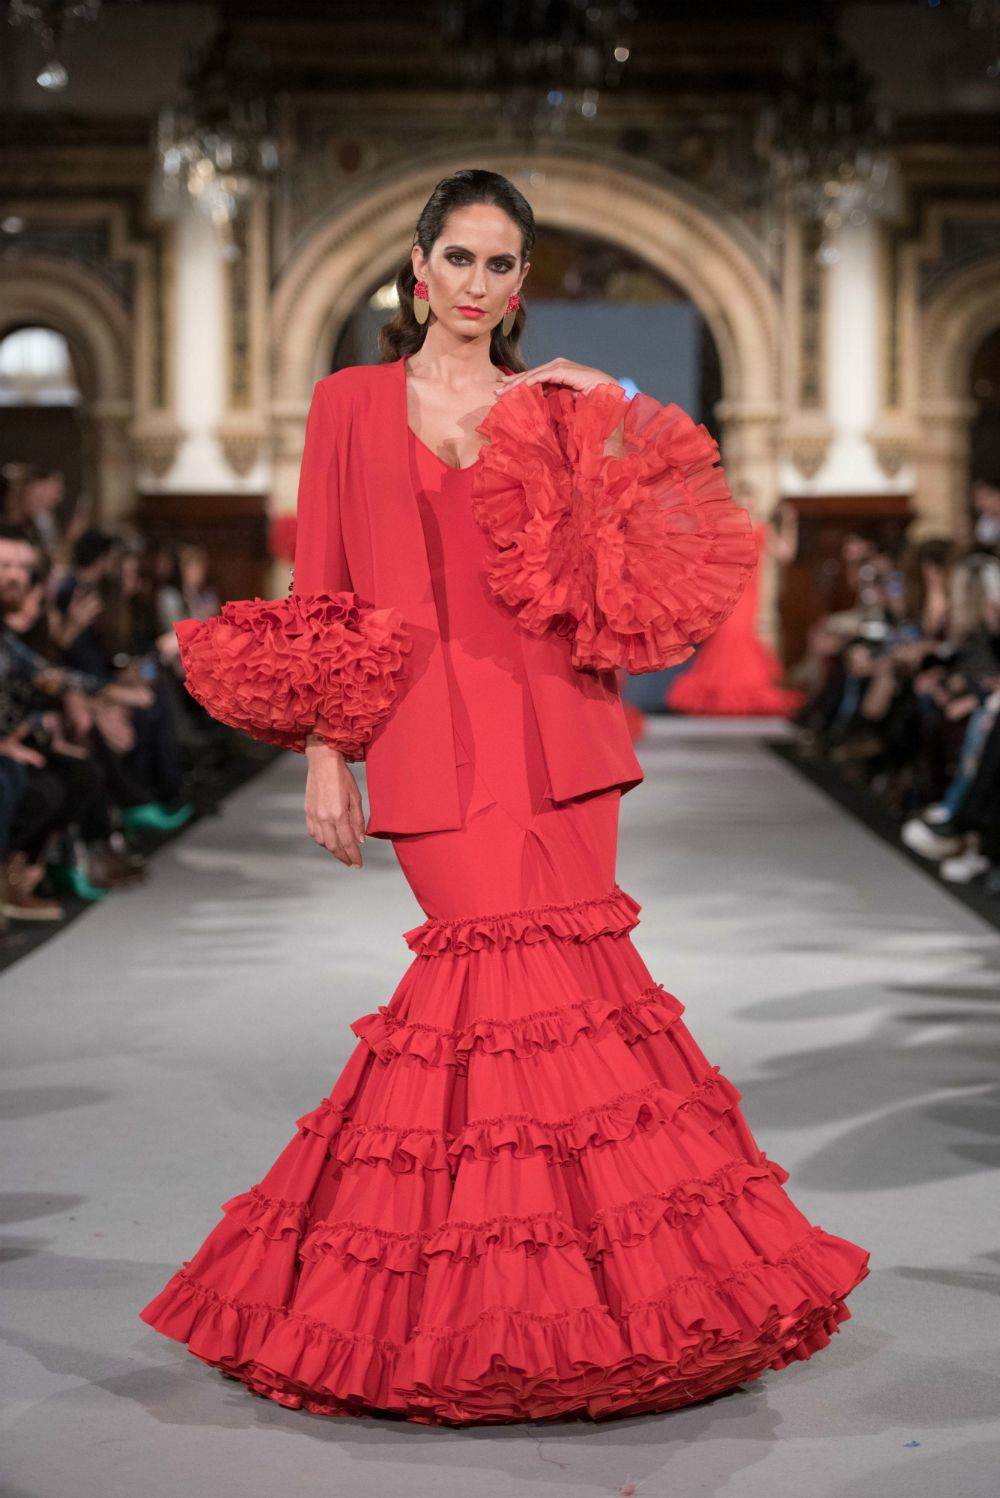 Las tendencias en moda flamenca para esta Feria de Abril - Woman